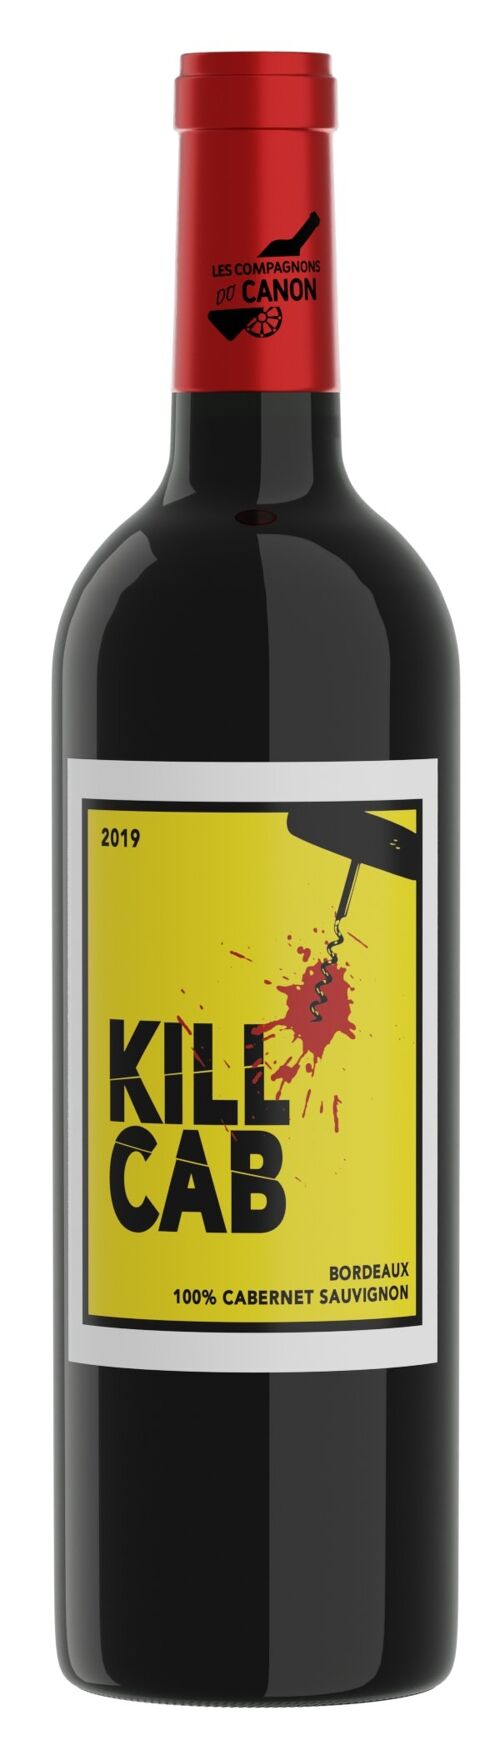 Kill Cab - Bordeaux 2021 - 100% Cabernet Sauvignon